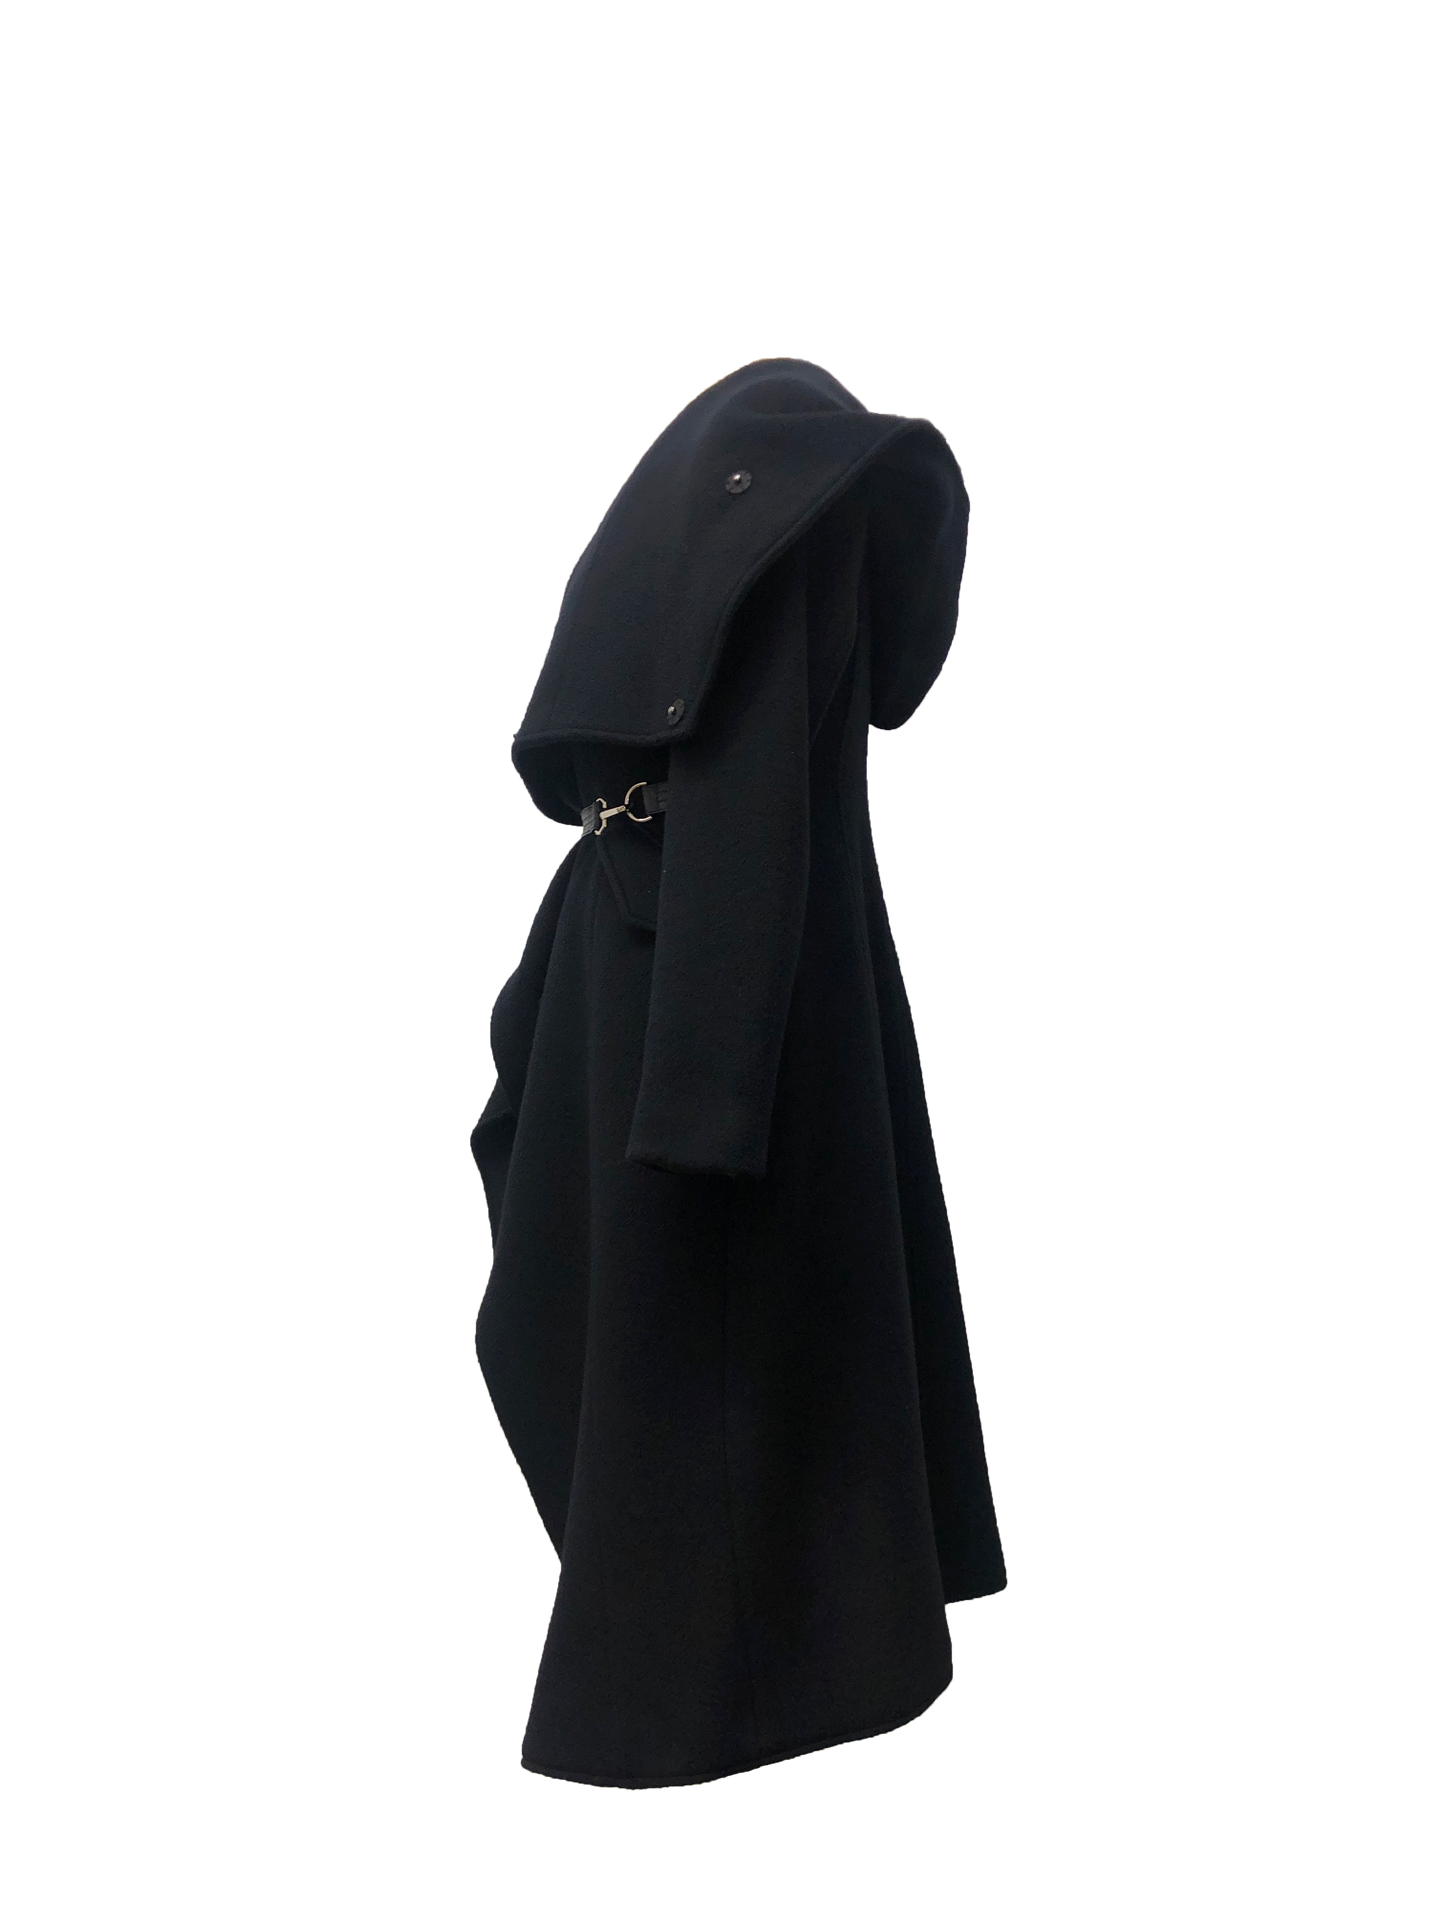 Medium length Black Coat with a hood and adjustable lambskin leather belt alongside metal clip closures turned sideways